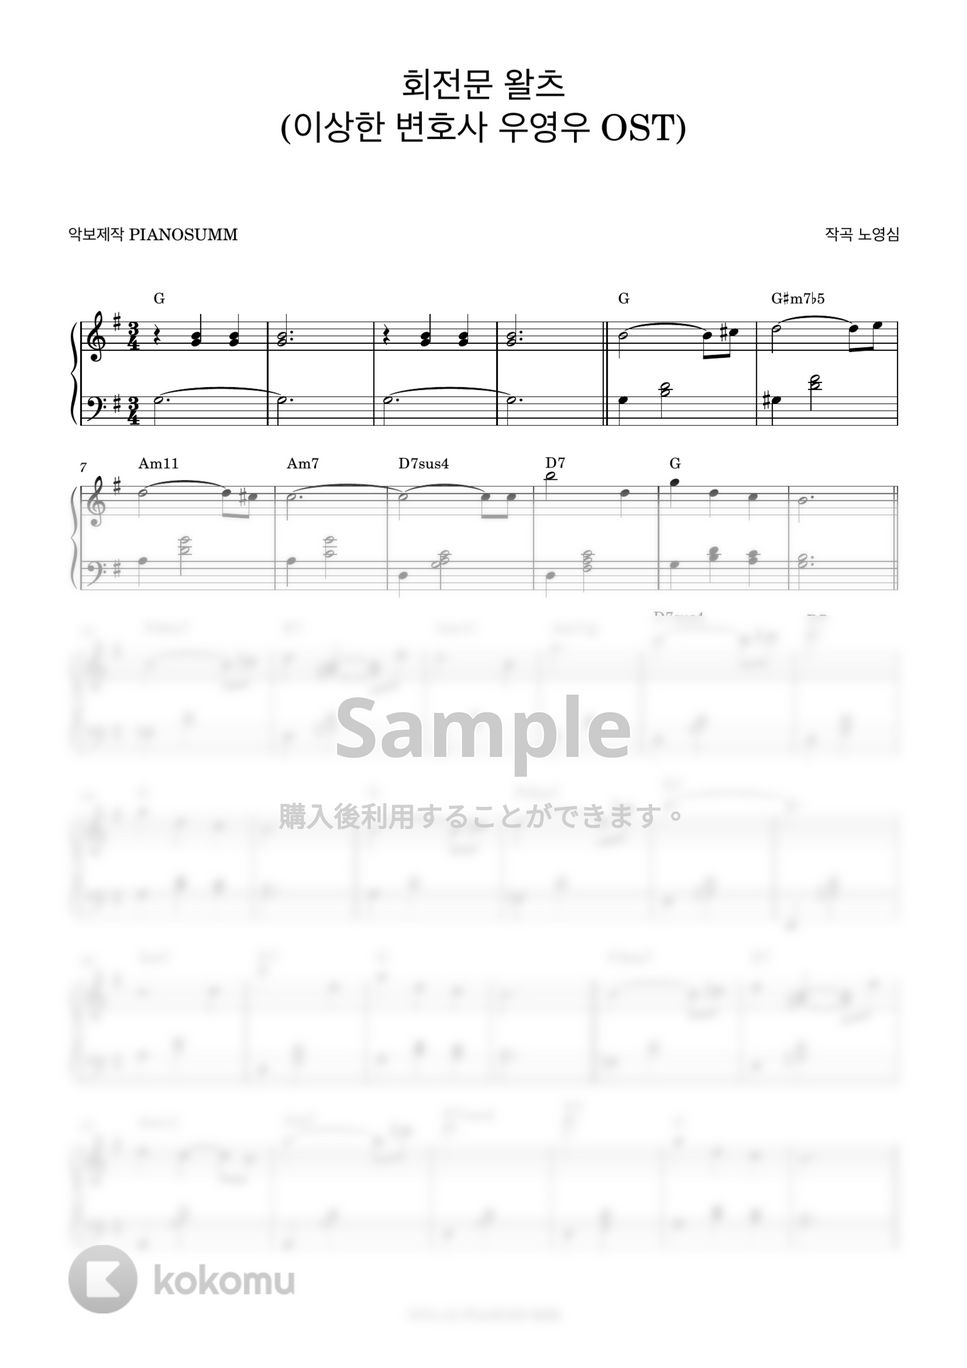 Extraordinary Attorney Woo OST - Revolving Door Waltz (회전문 왈츠) by PIANOSUMM